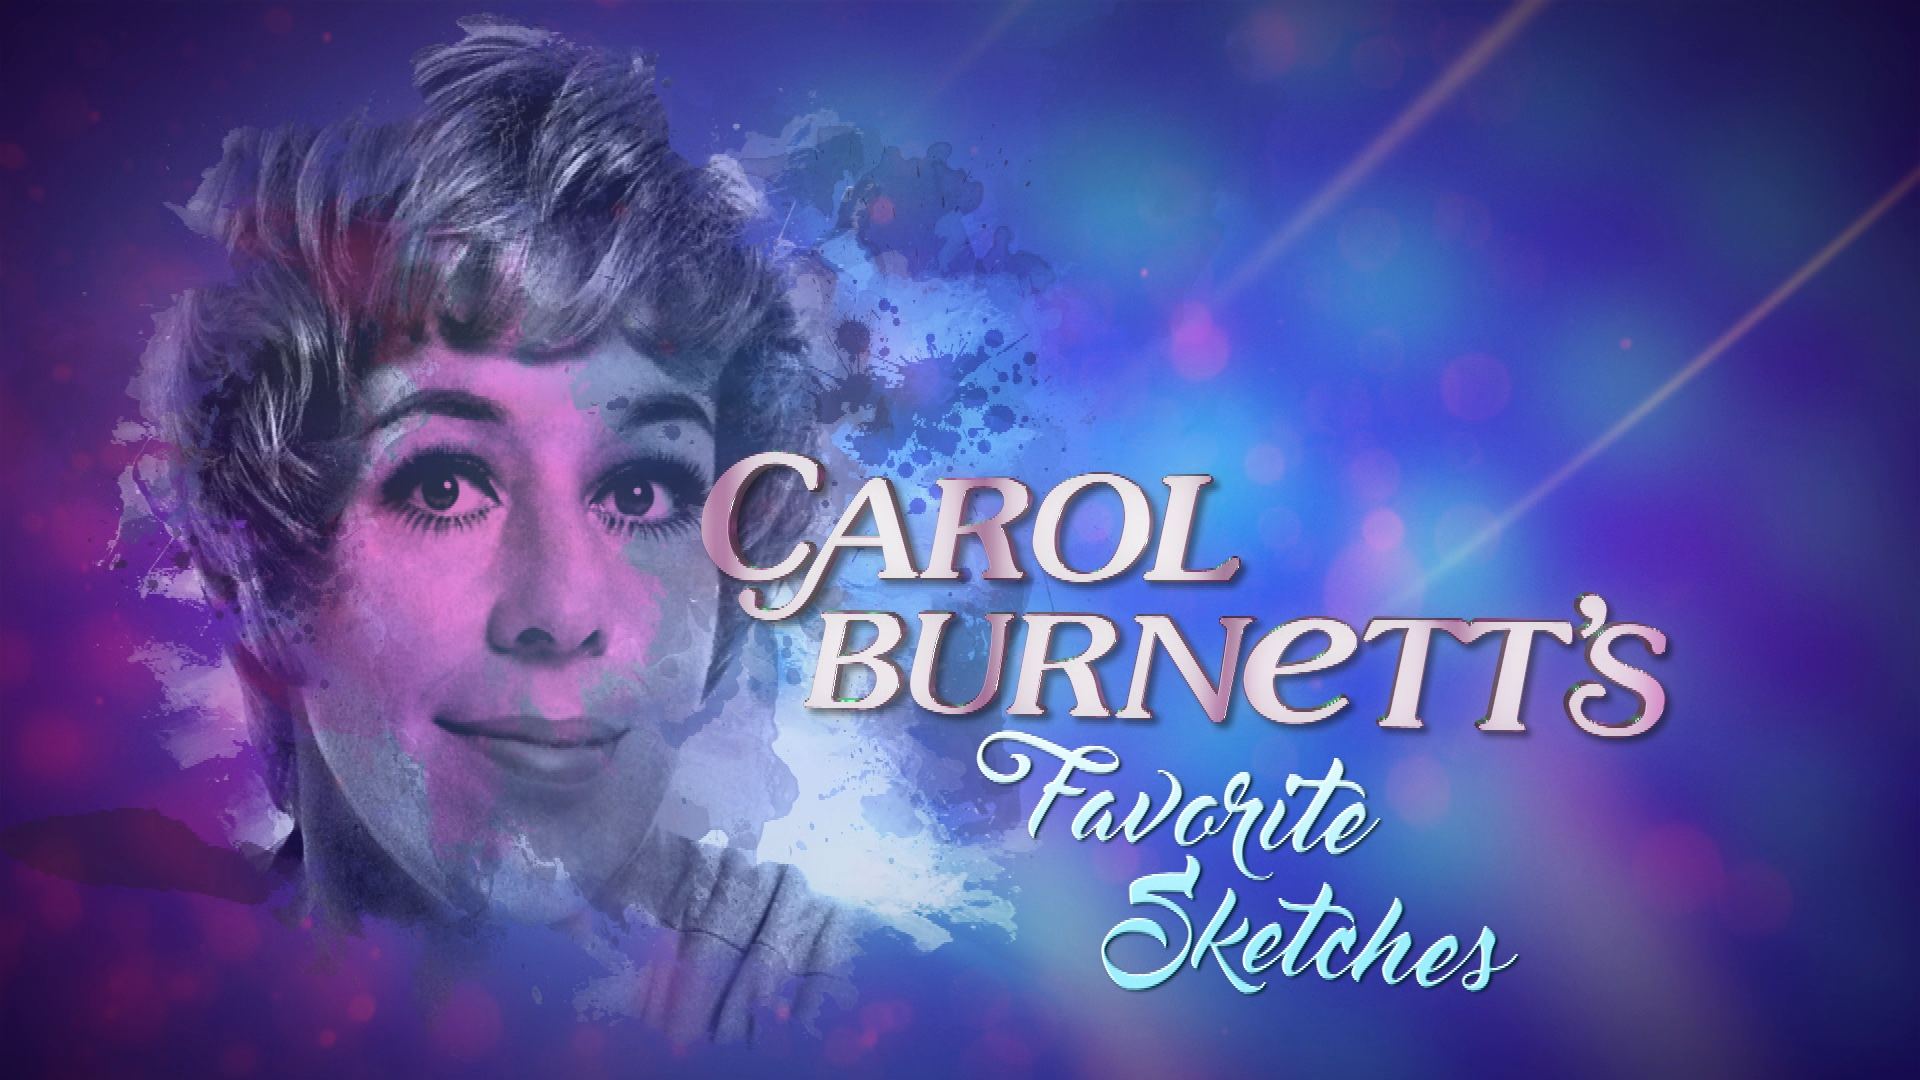 The Carol Burnett Show: PBS Airs Carol Burnett's Favorite Sketches Spe...